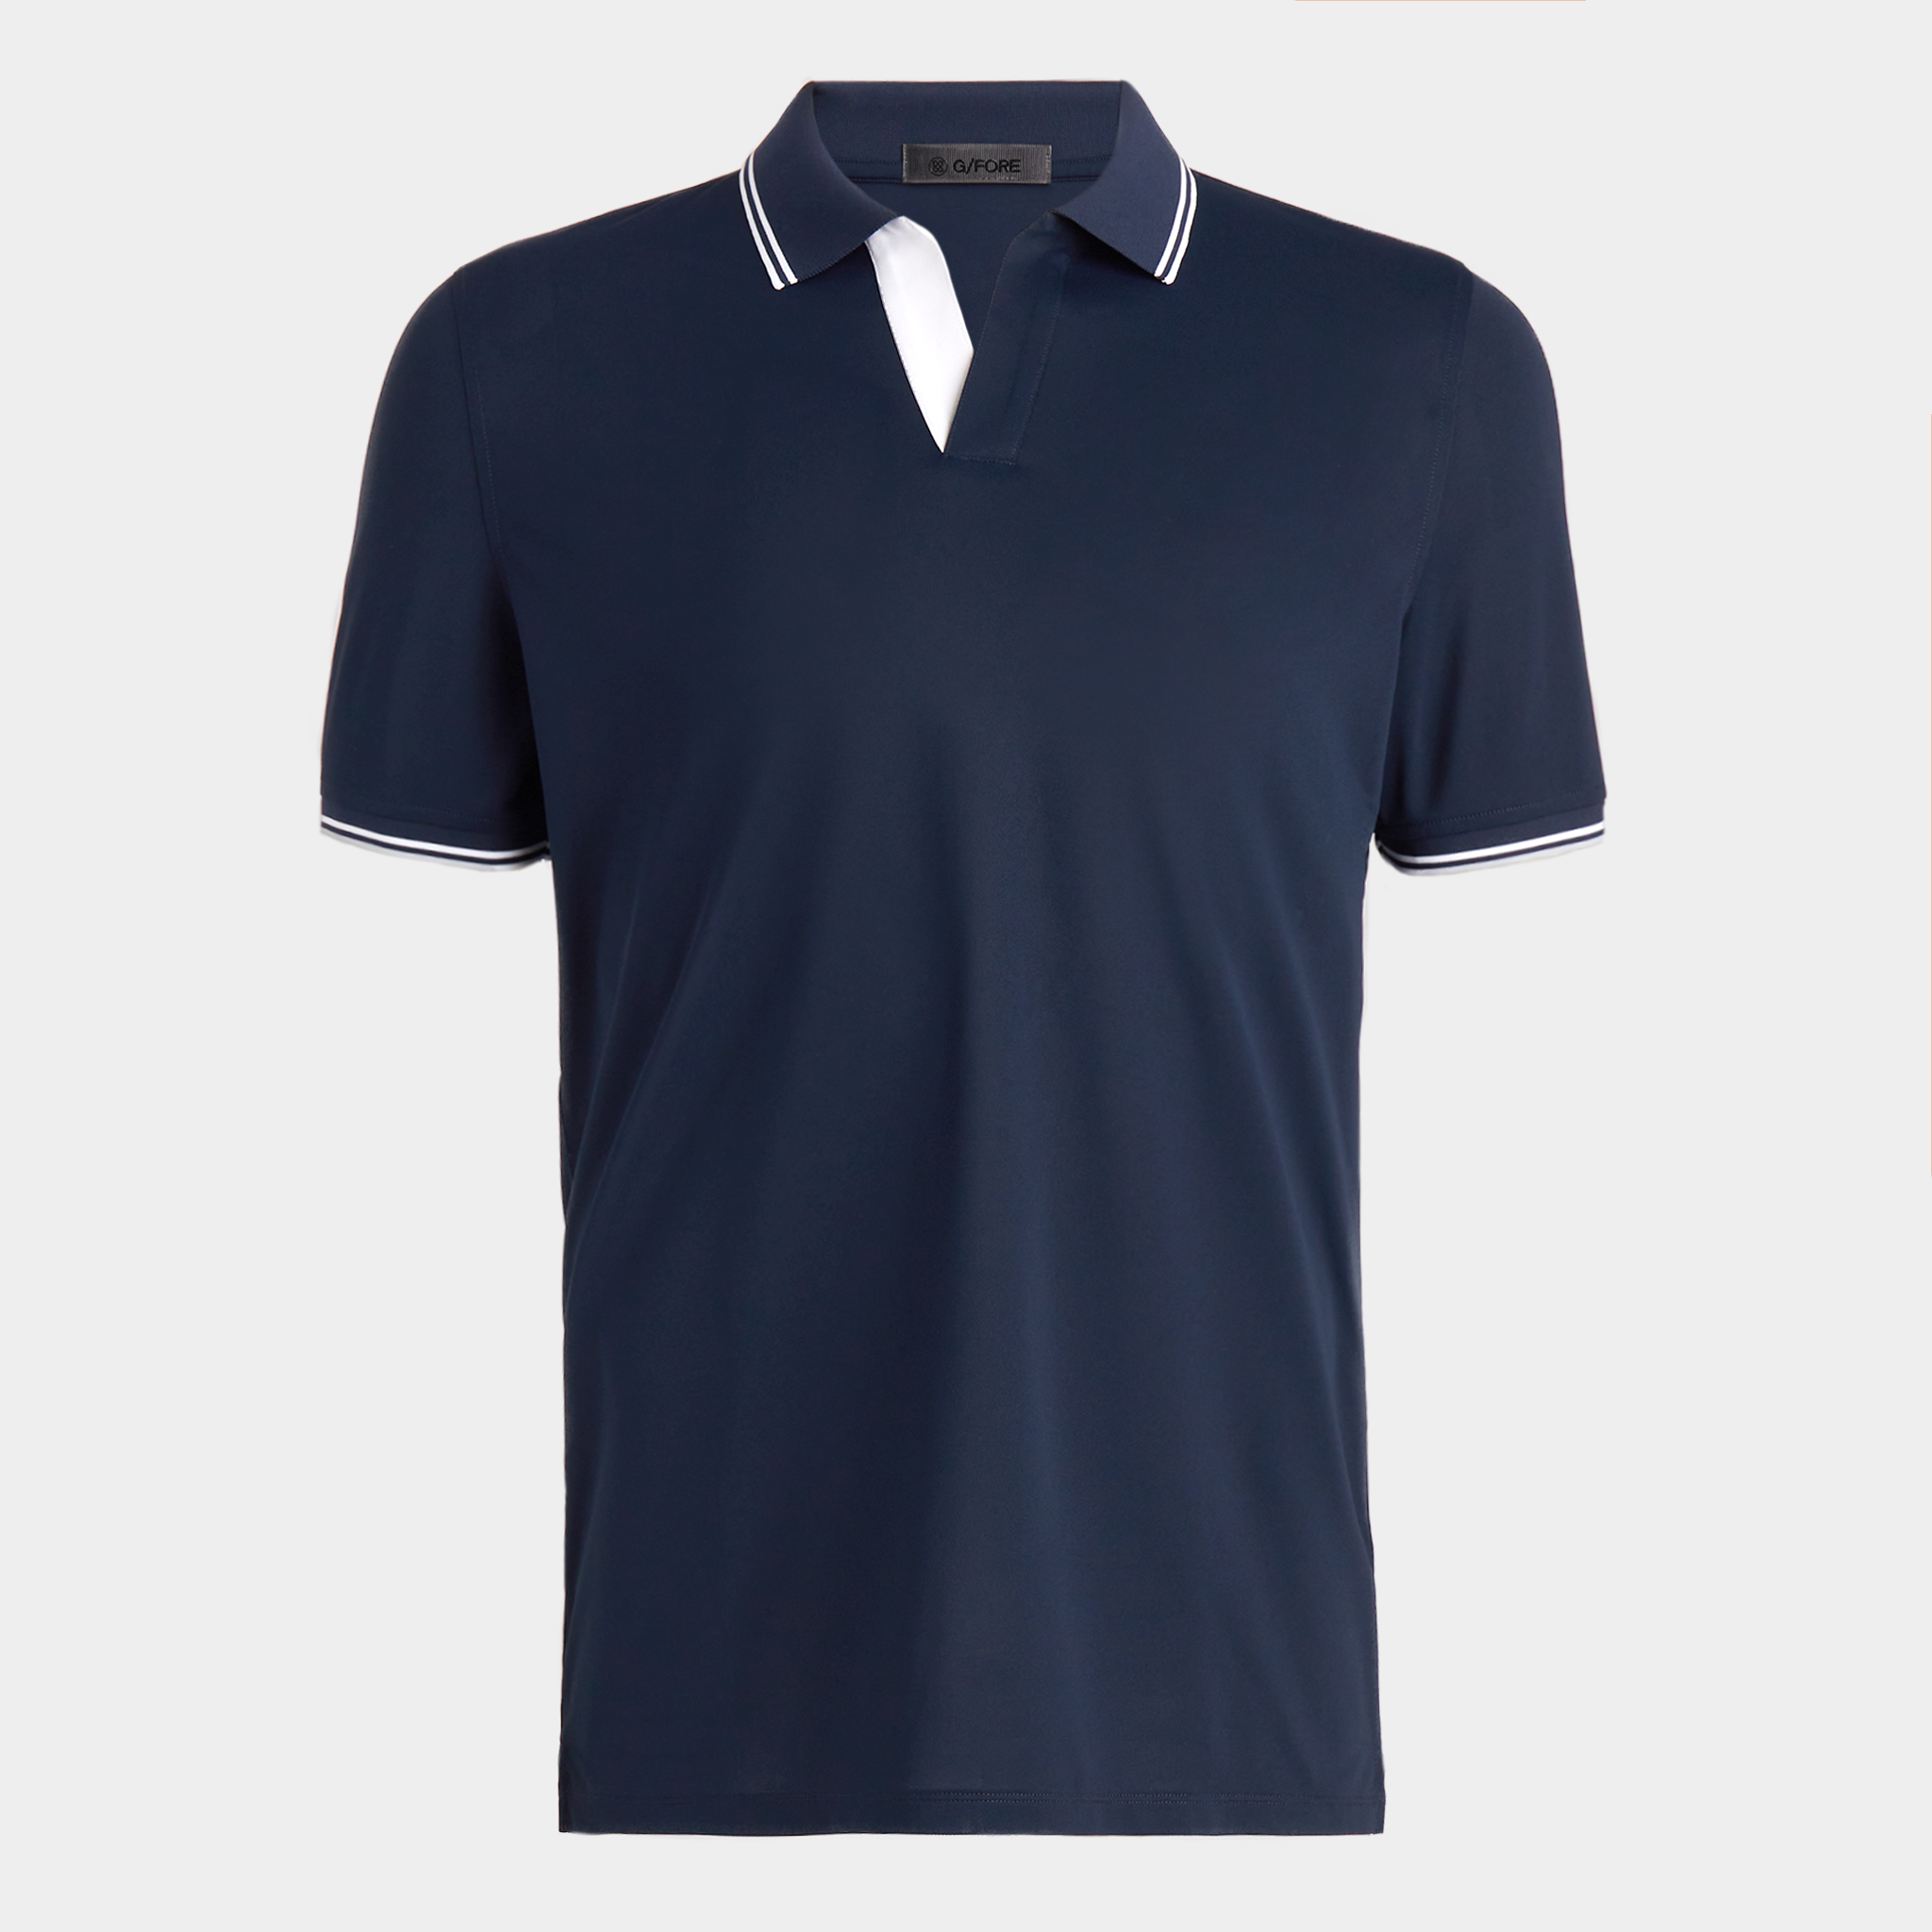 Polo Shirts for Men, Men's Golf Polo Shirts Moisture Wicking Performance  Short Sleeve Tennis Shirt Color Block Pique Shirt Navy at  Men's  Clothing store